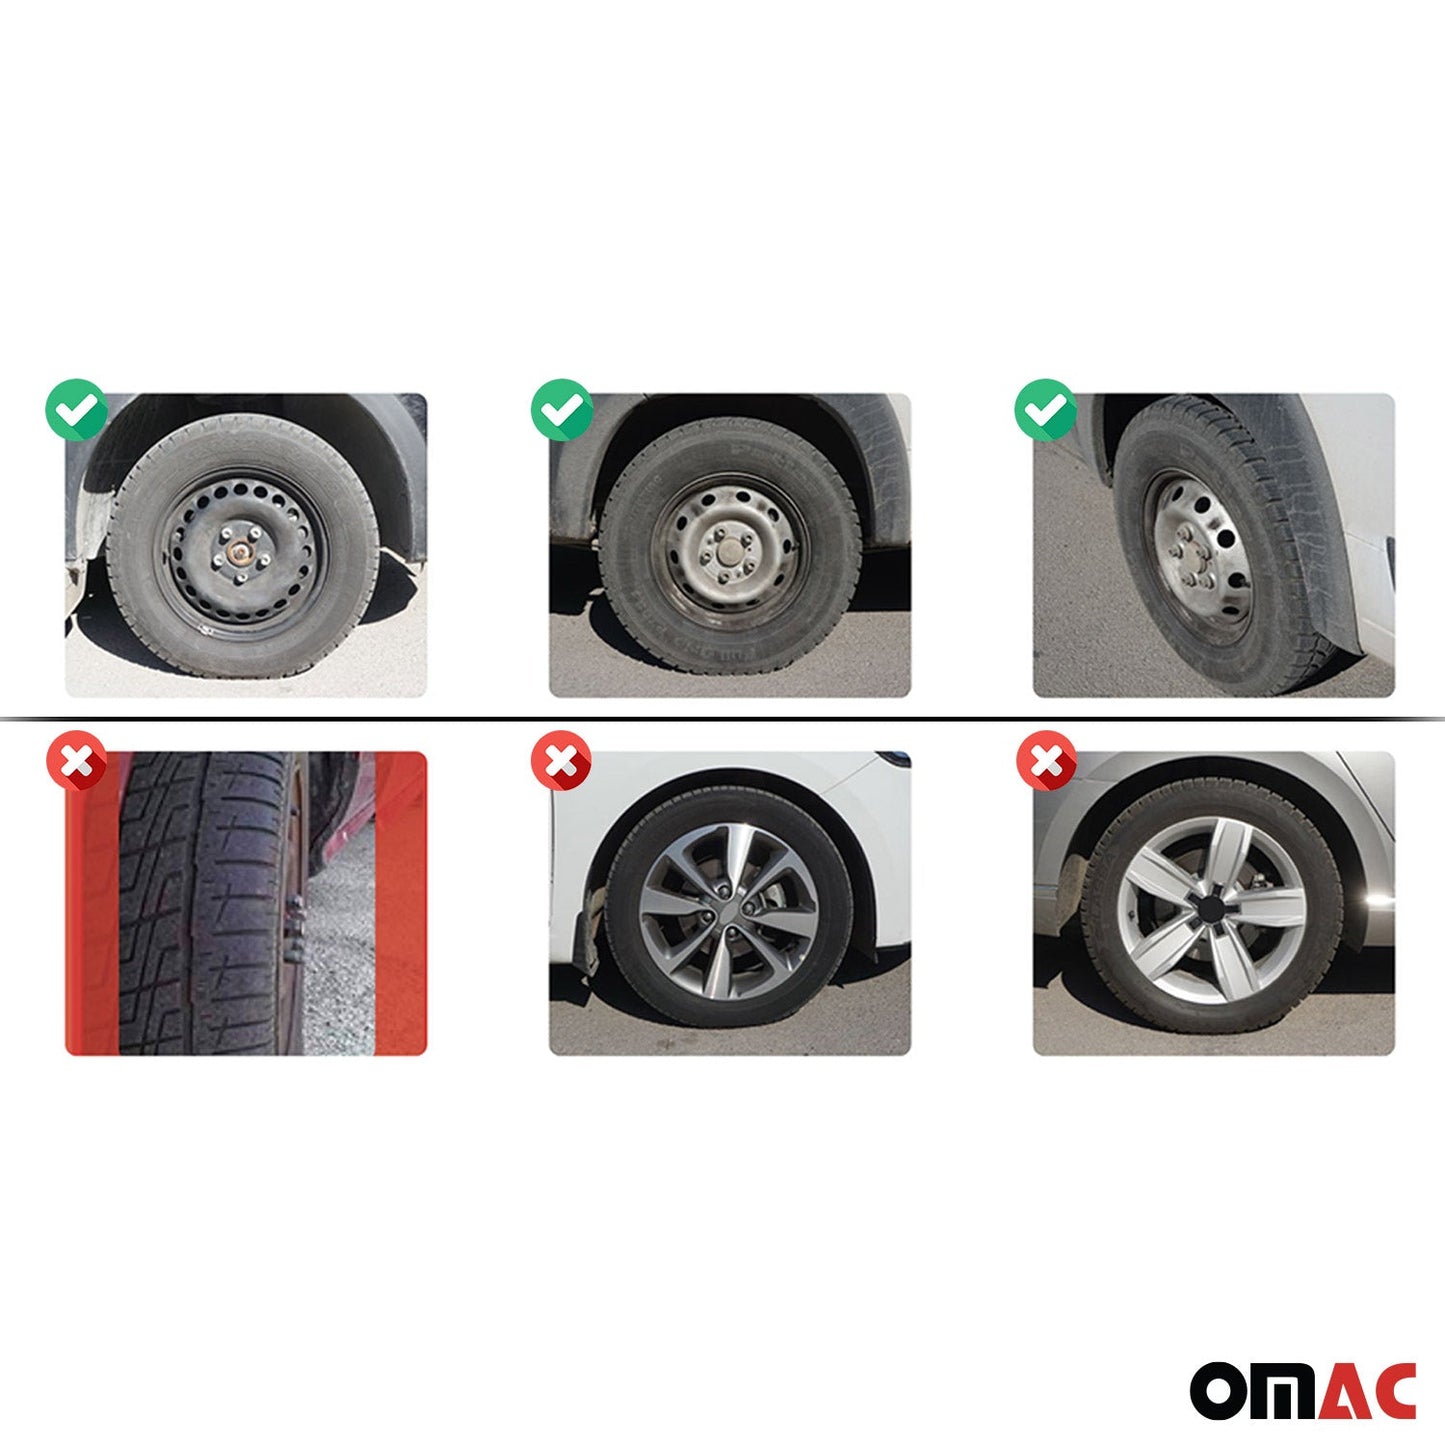 OMAC 16" Hubcaps Wheel Rim Cover with Light Blue Insert 4pcs Set VRT99FR243B16LB